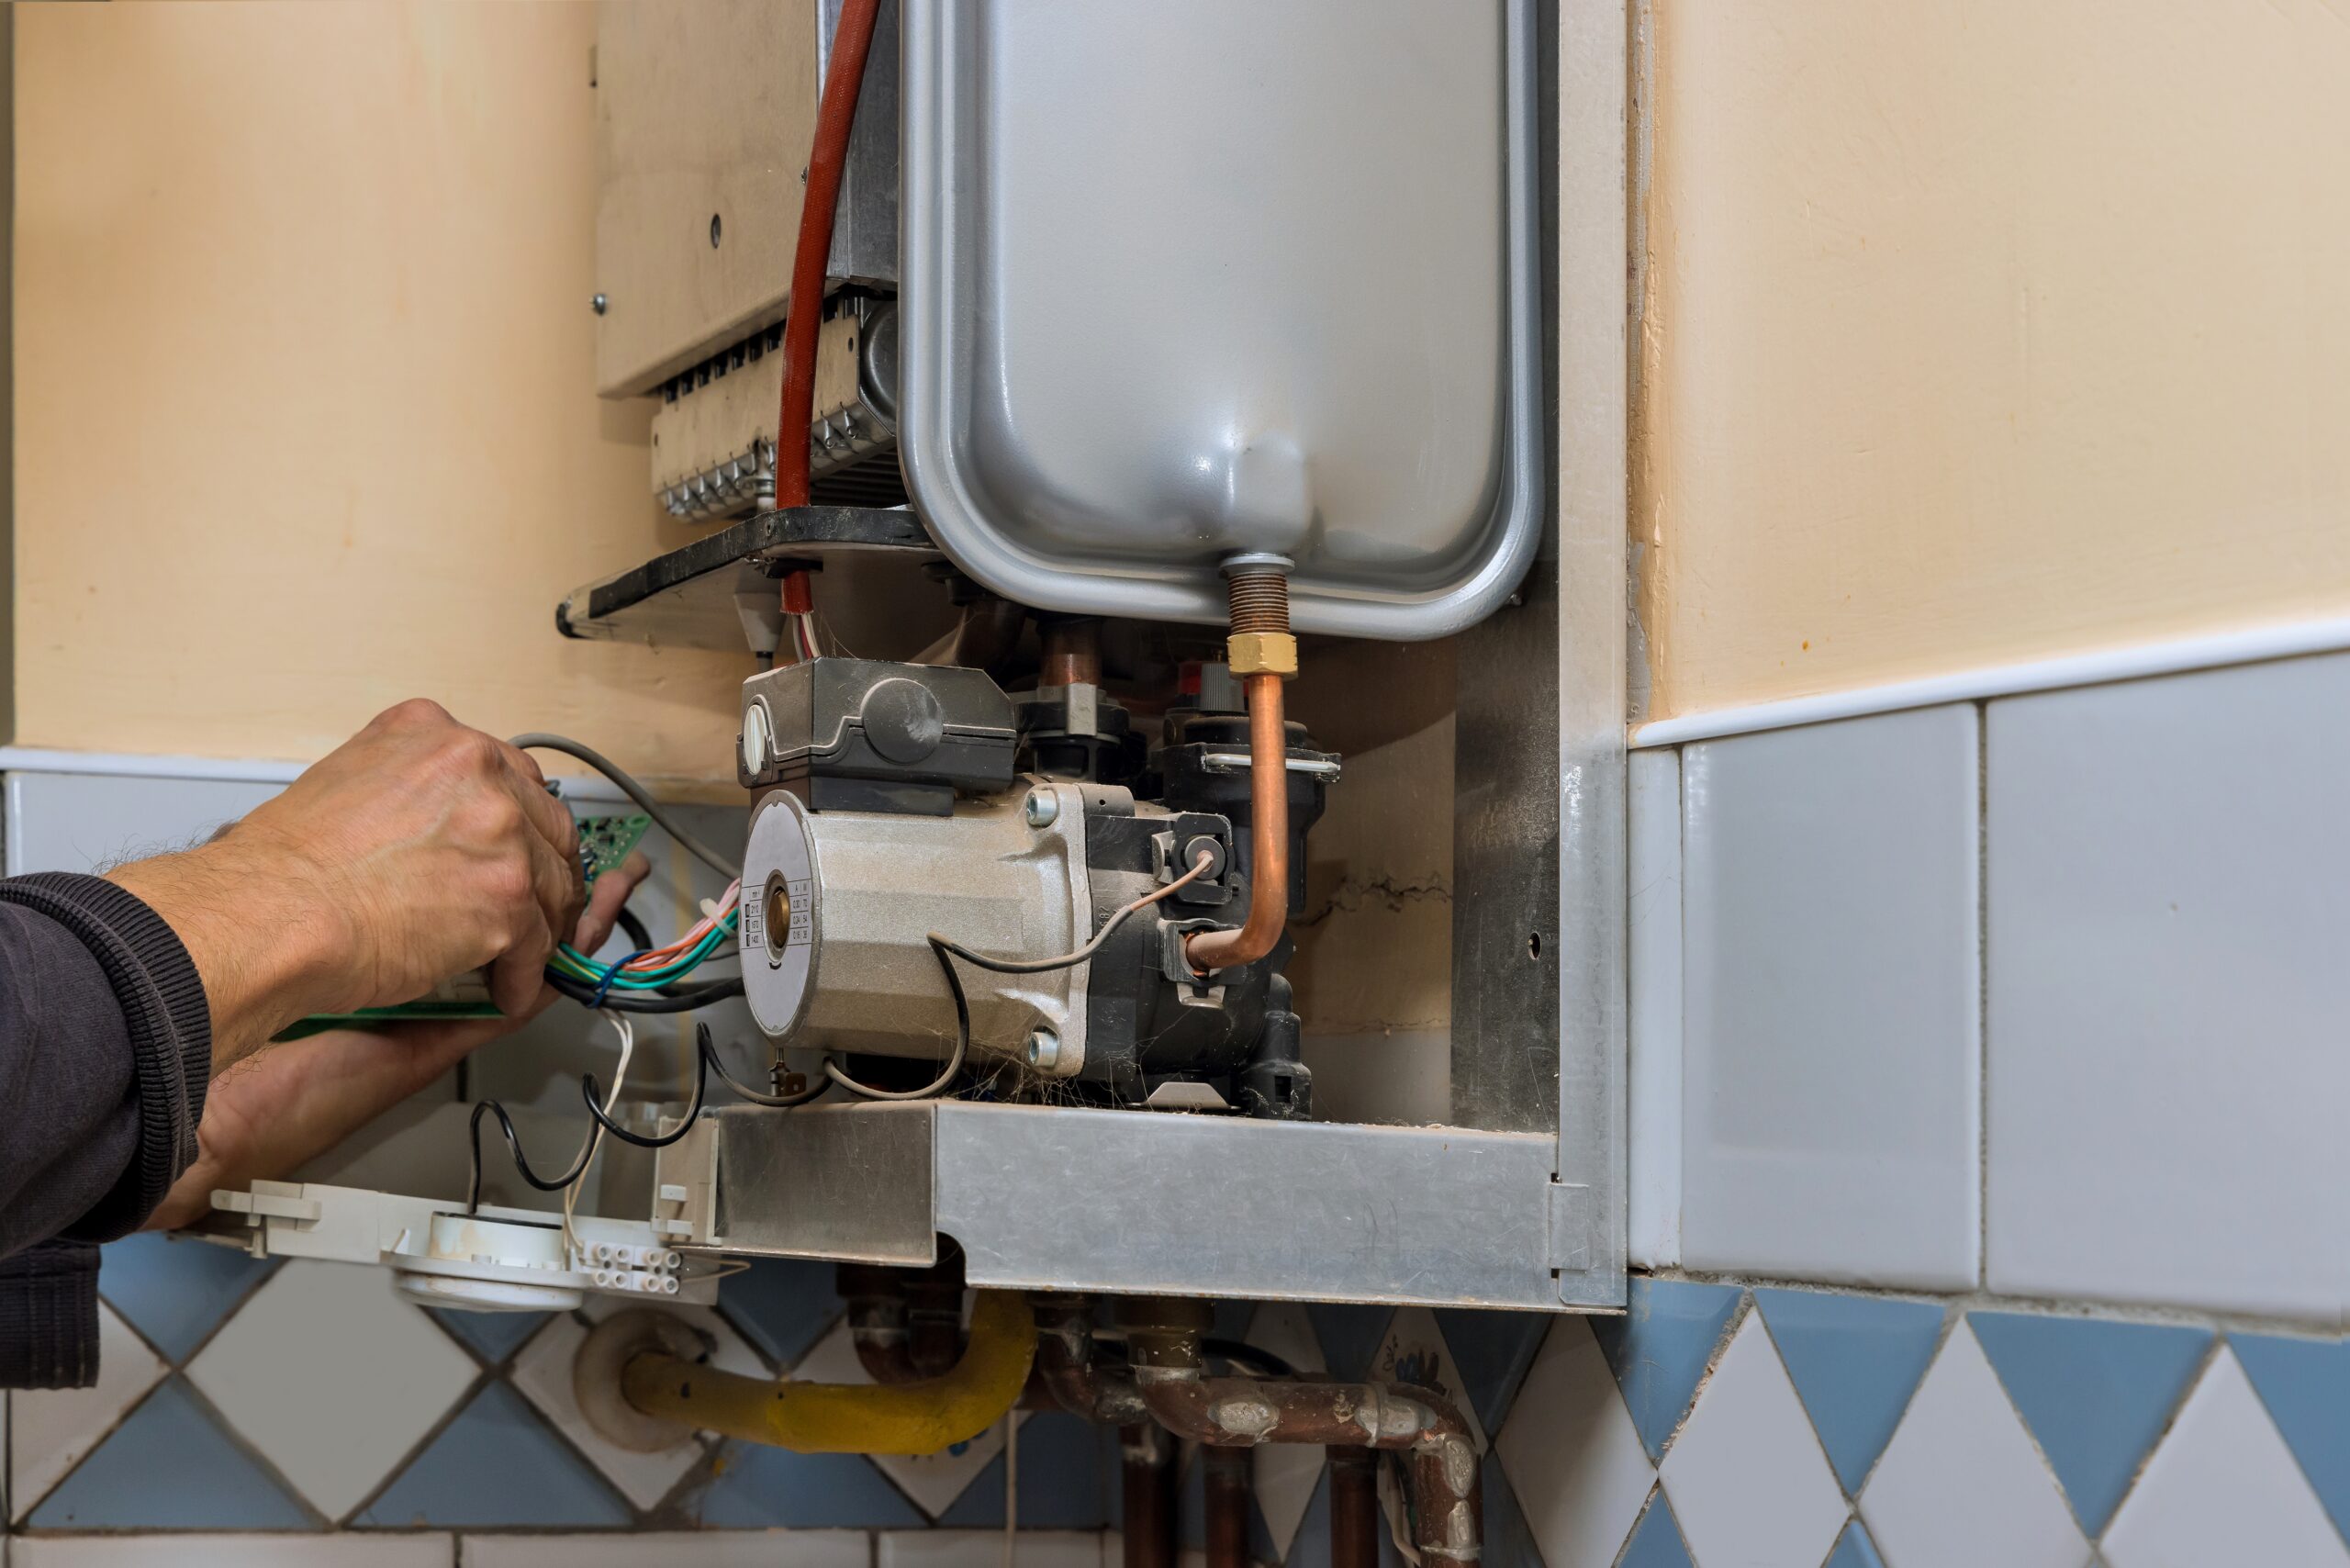 Water heater maintenance service technician repairing gas water heater-dawd124